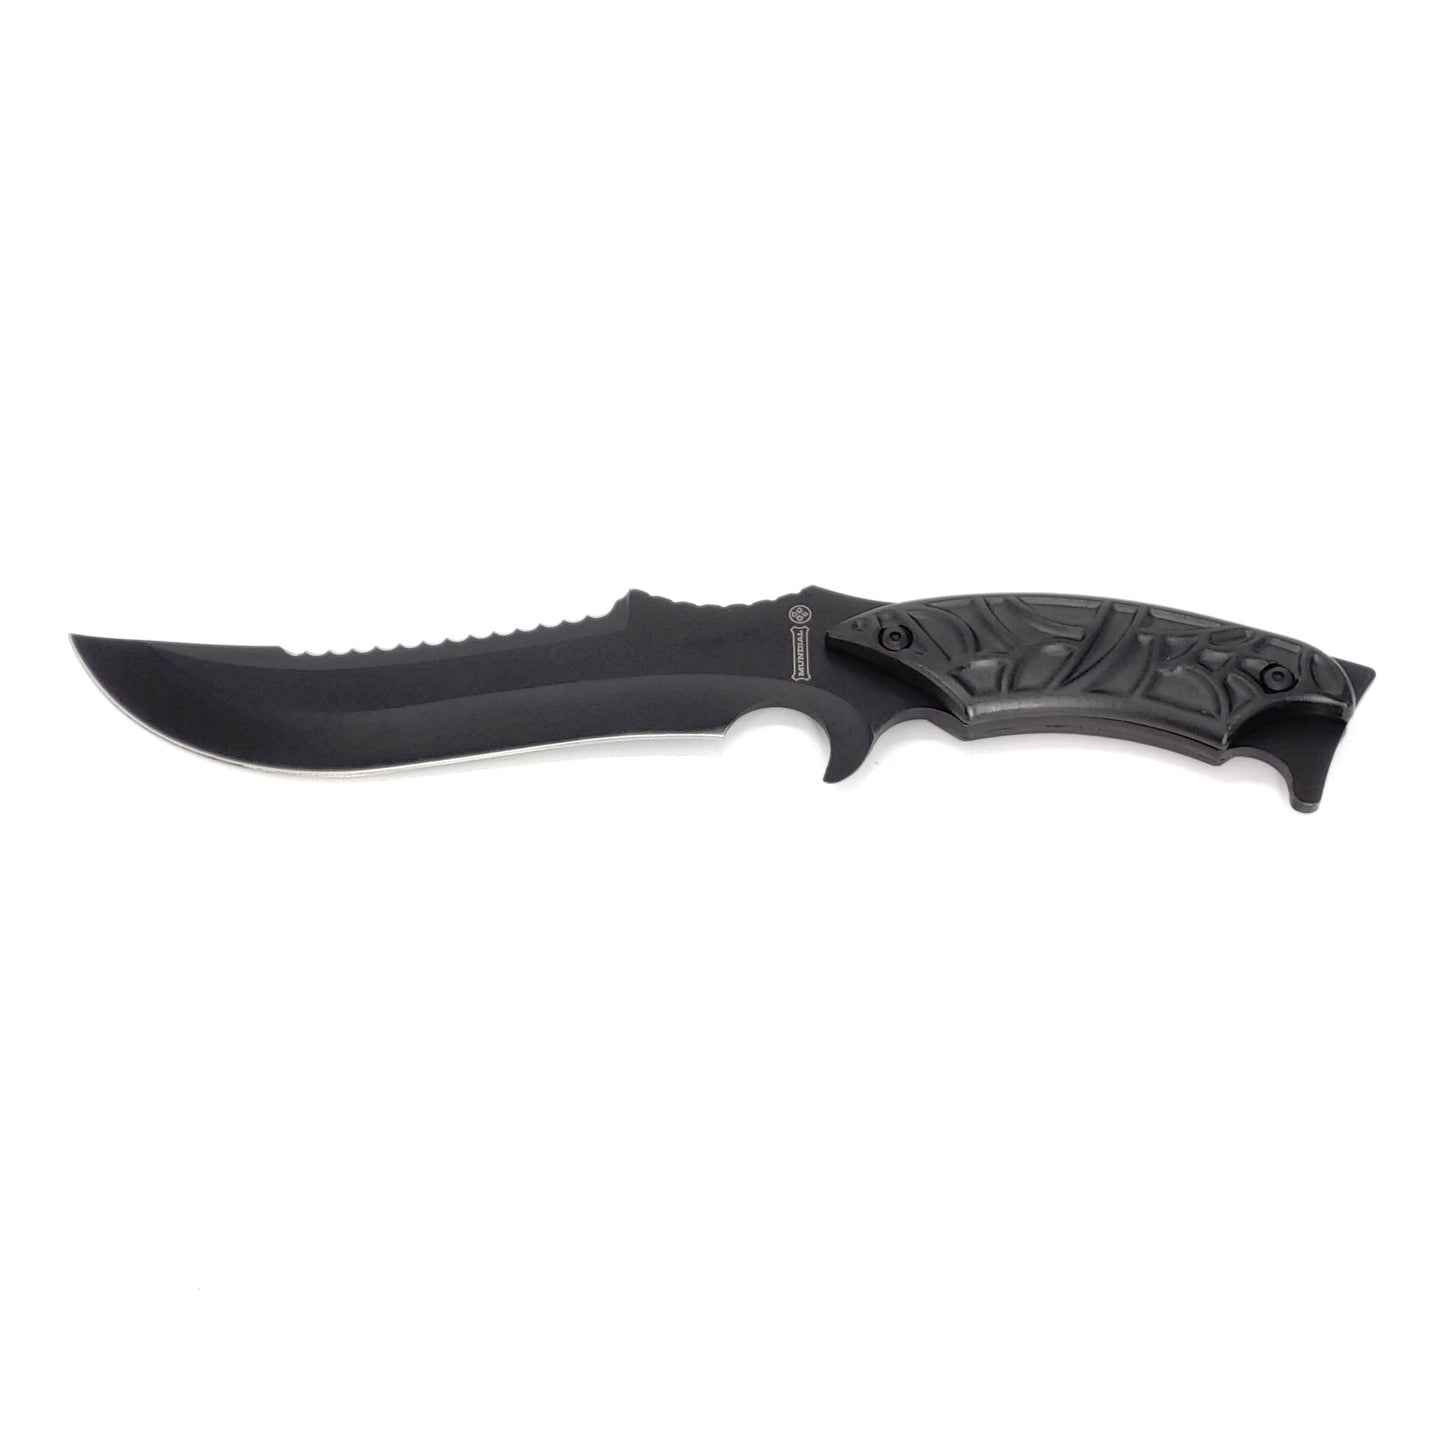 MUNDIAL BLACK FIXED BLADE KNIFE